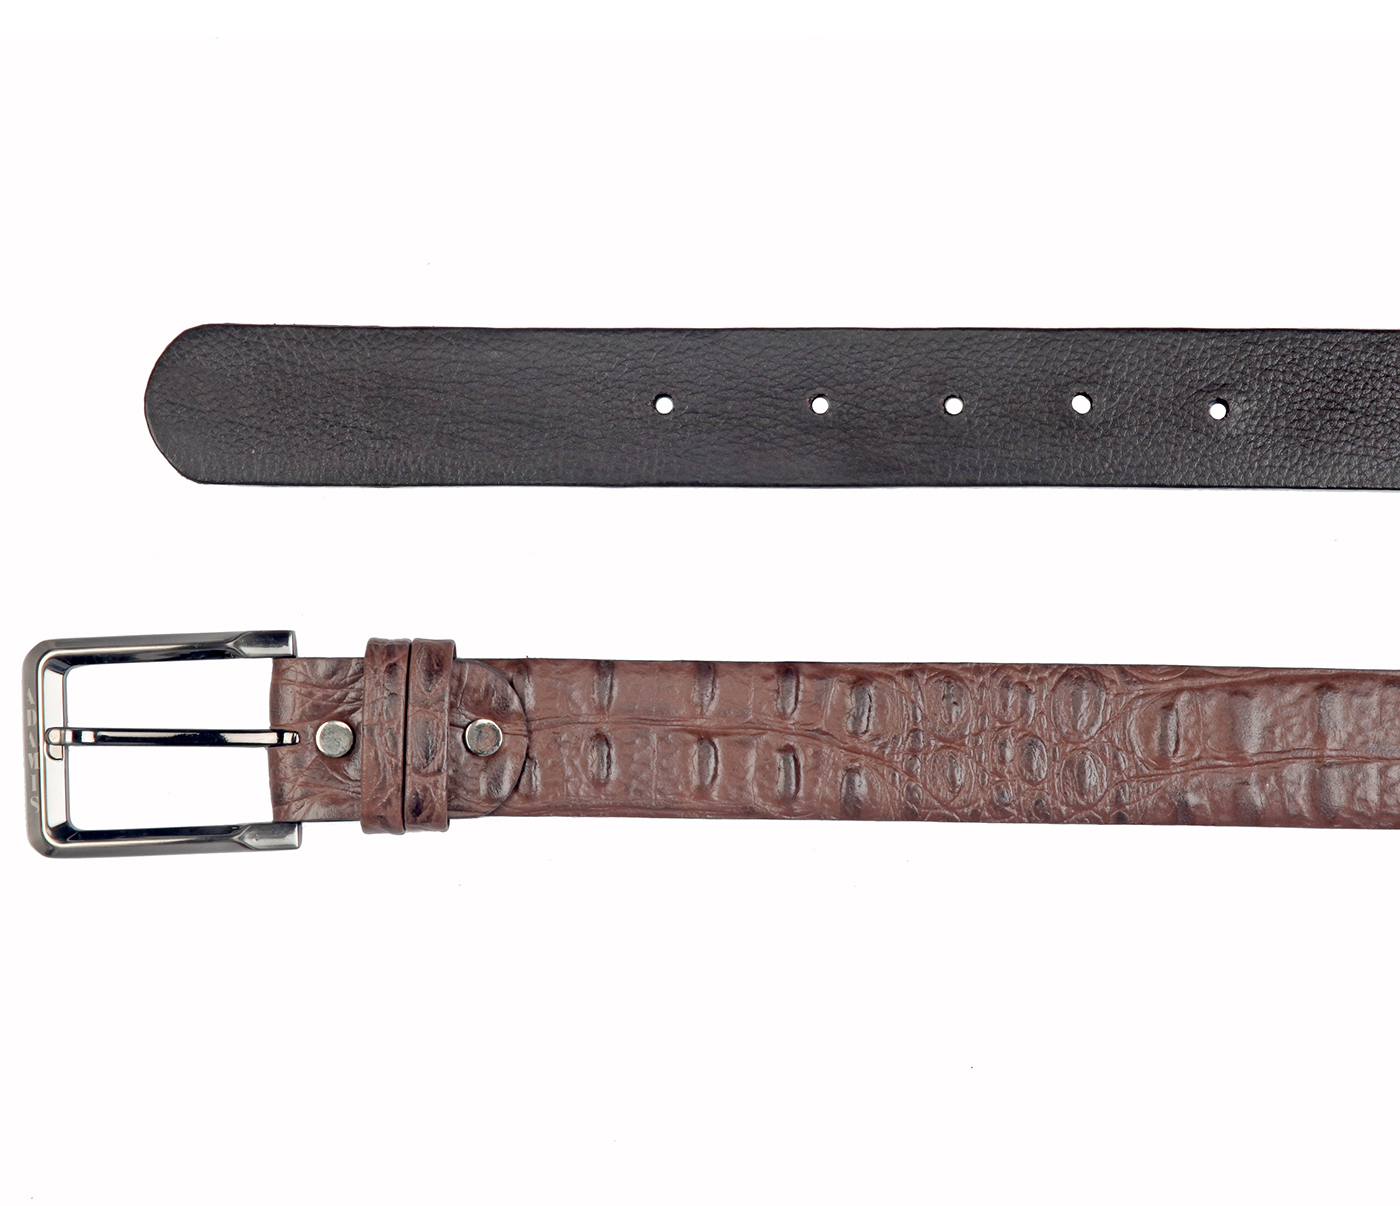 BL164--Men's Formal wear belt in Genuine Leather - Brown